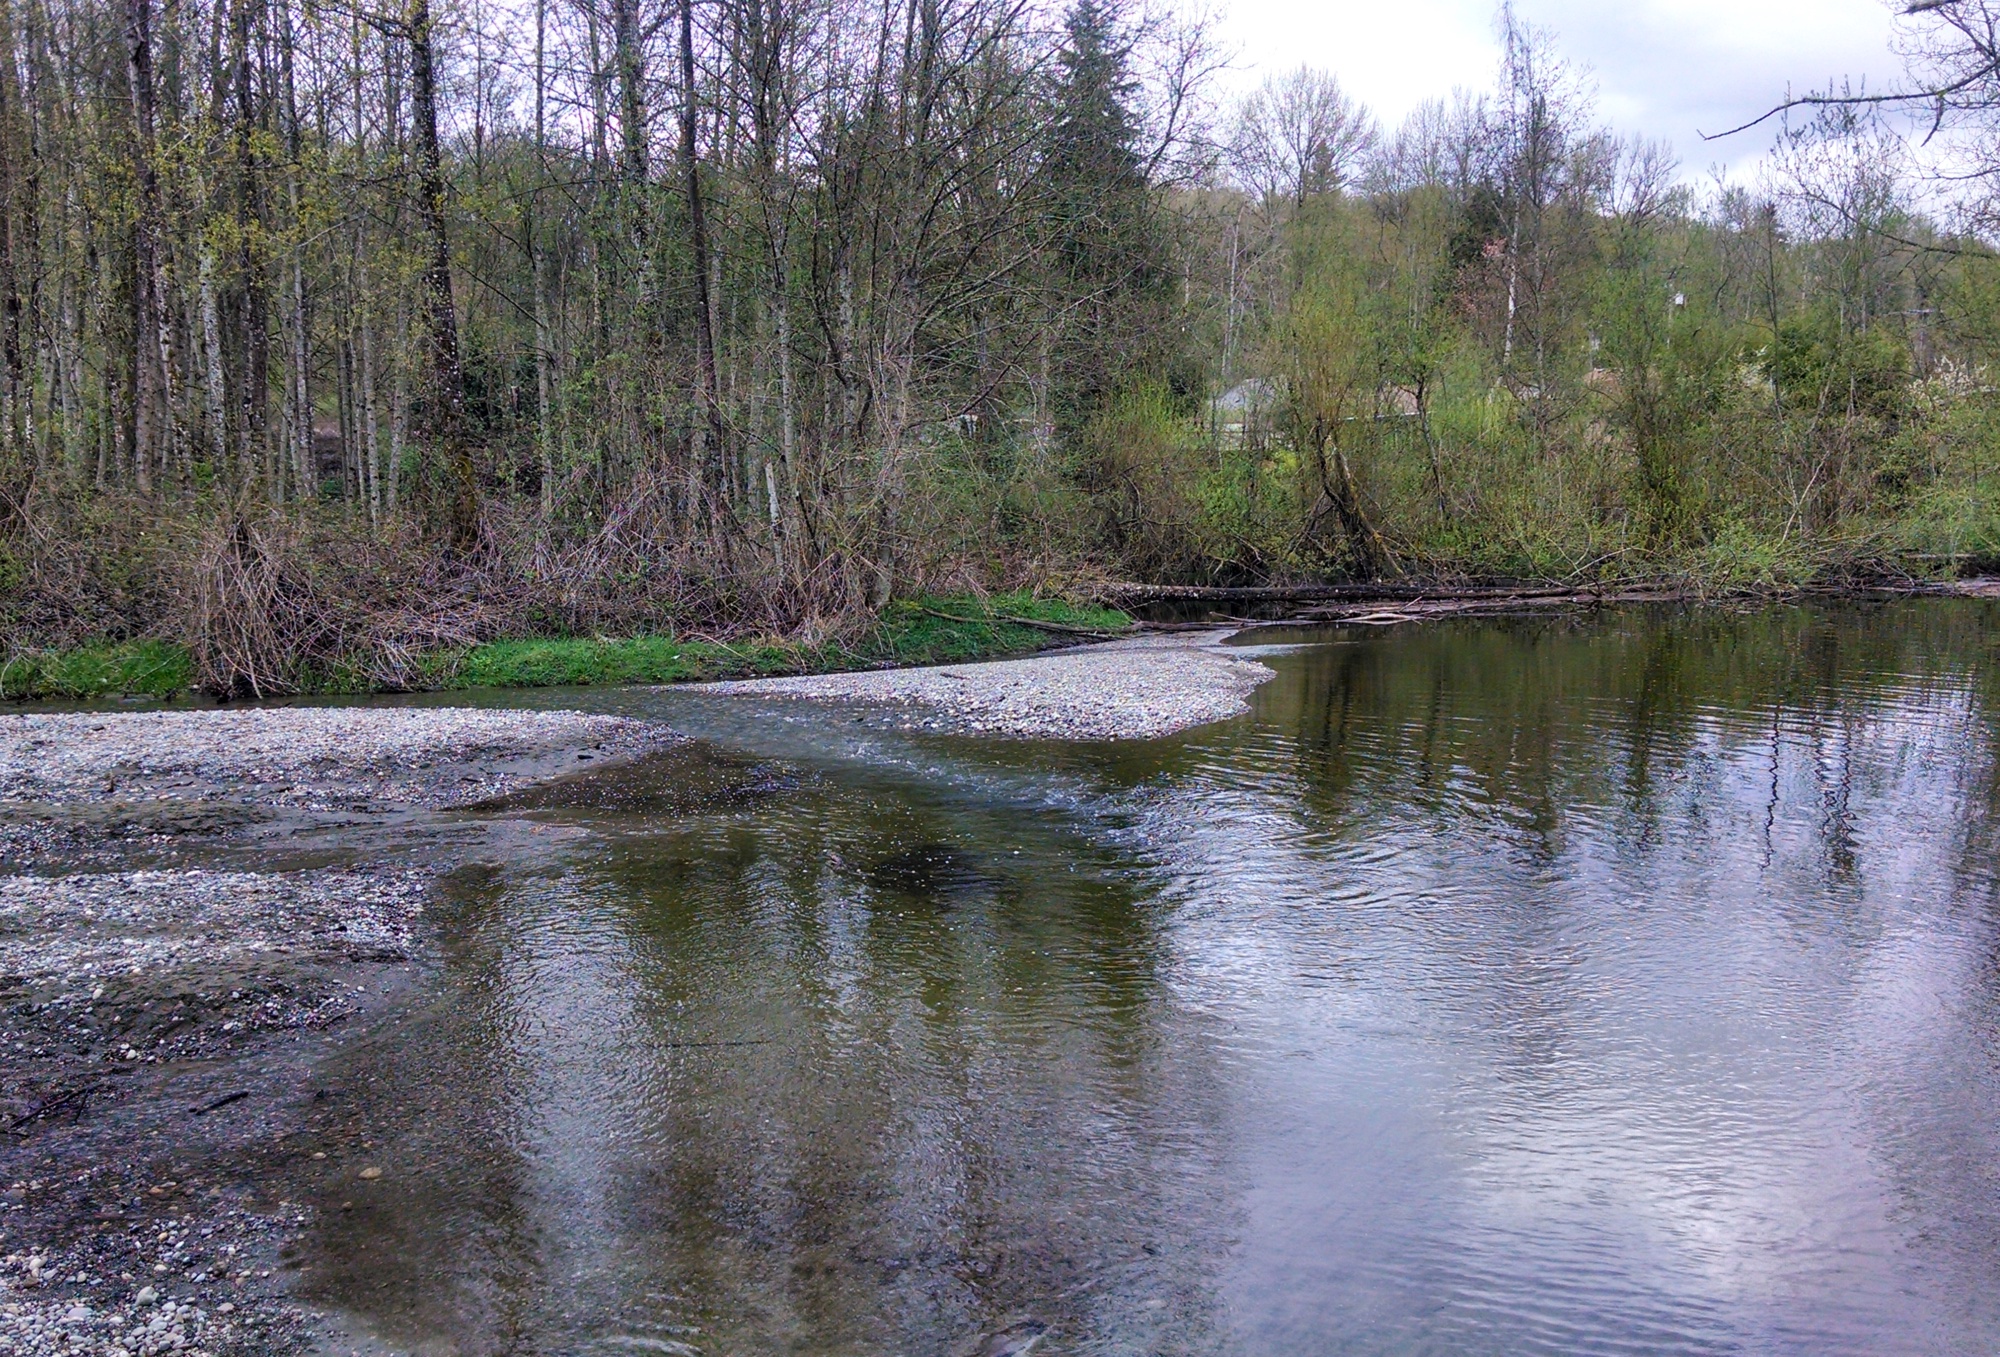 swan creek